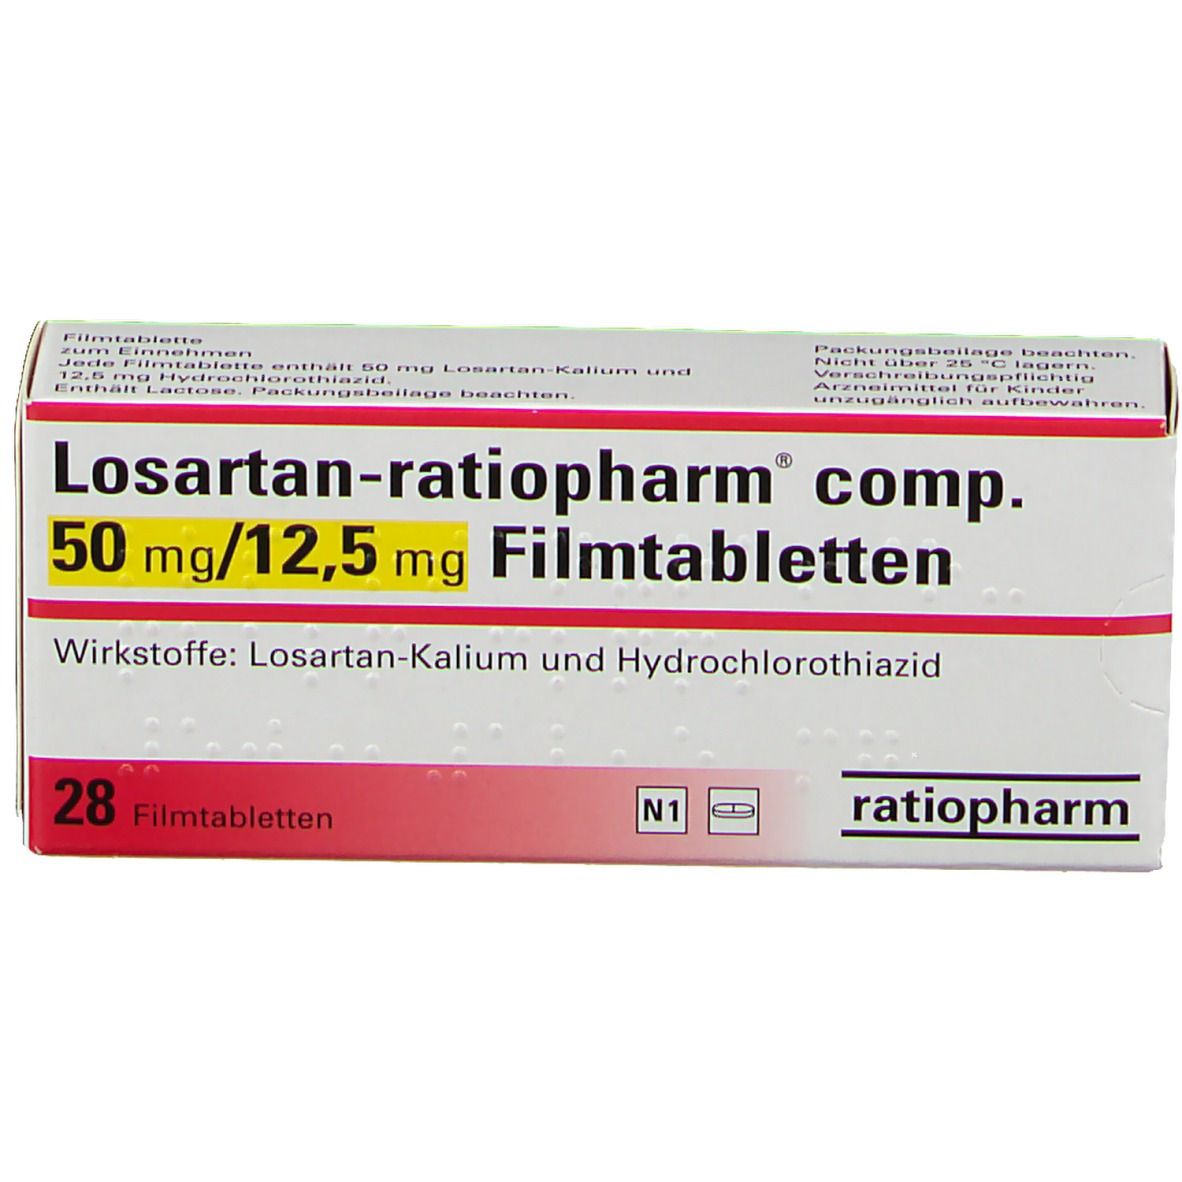 Losartan-ratiopharm® comp. 50 mg/12,5 mg